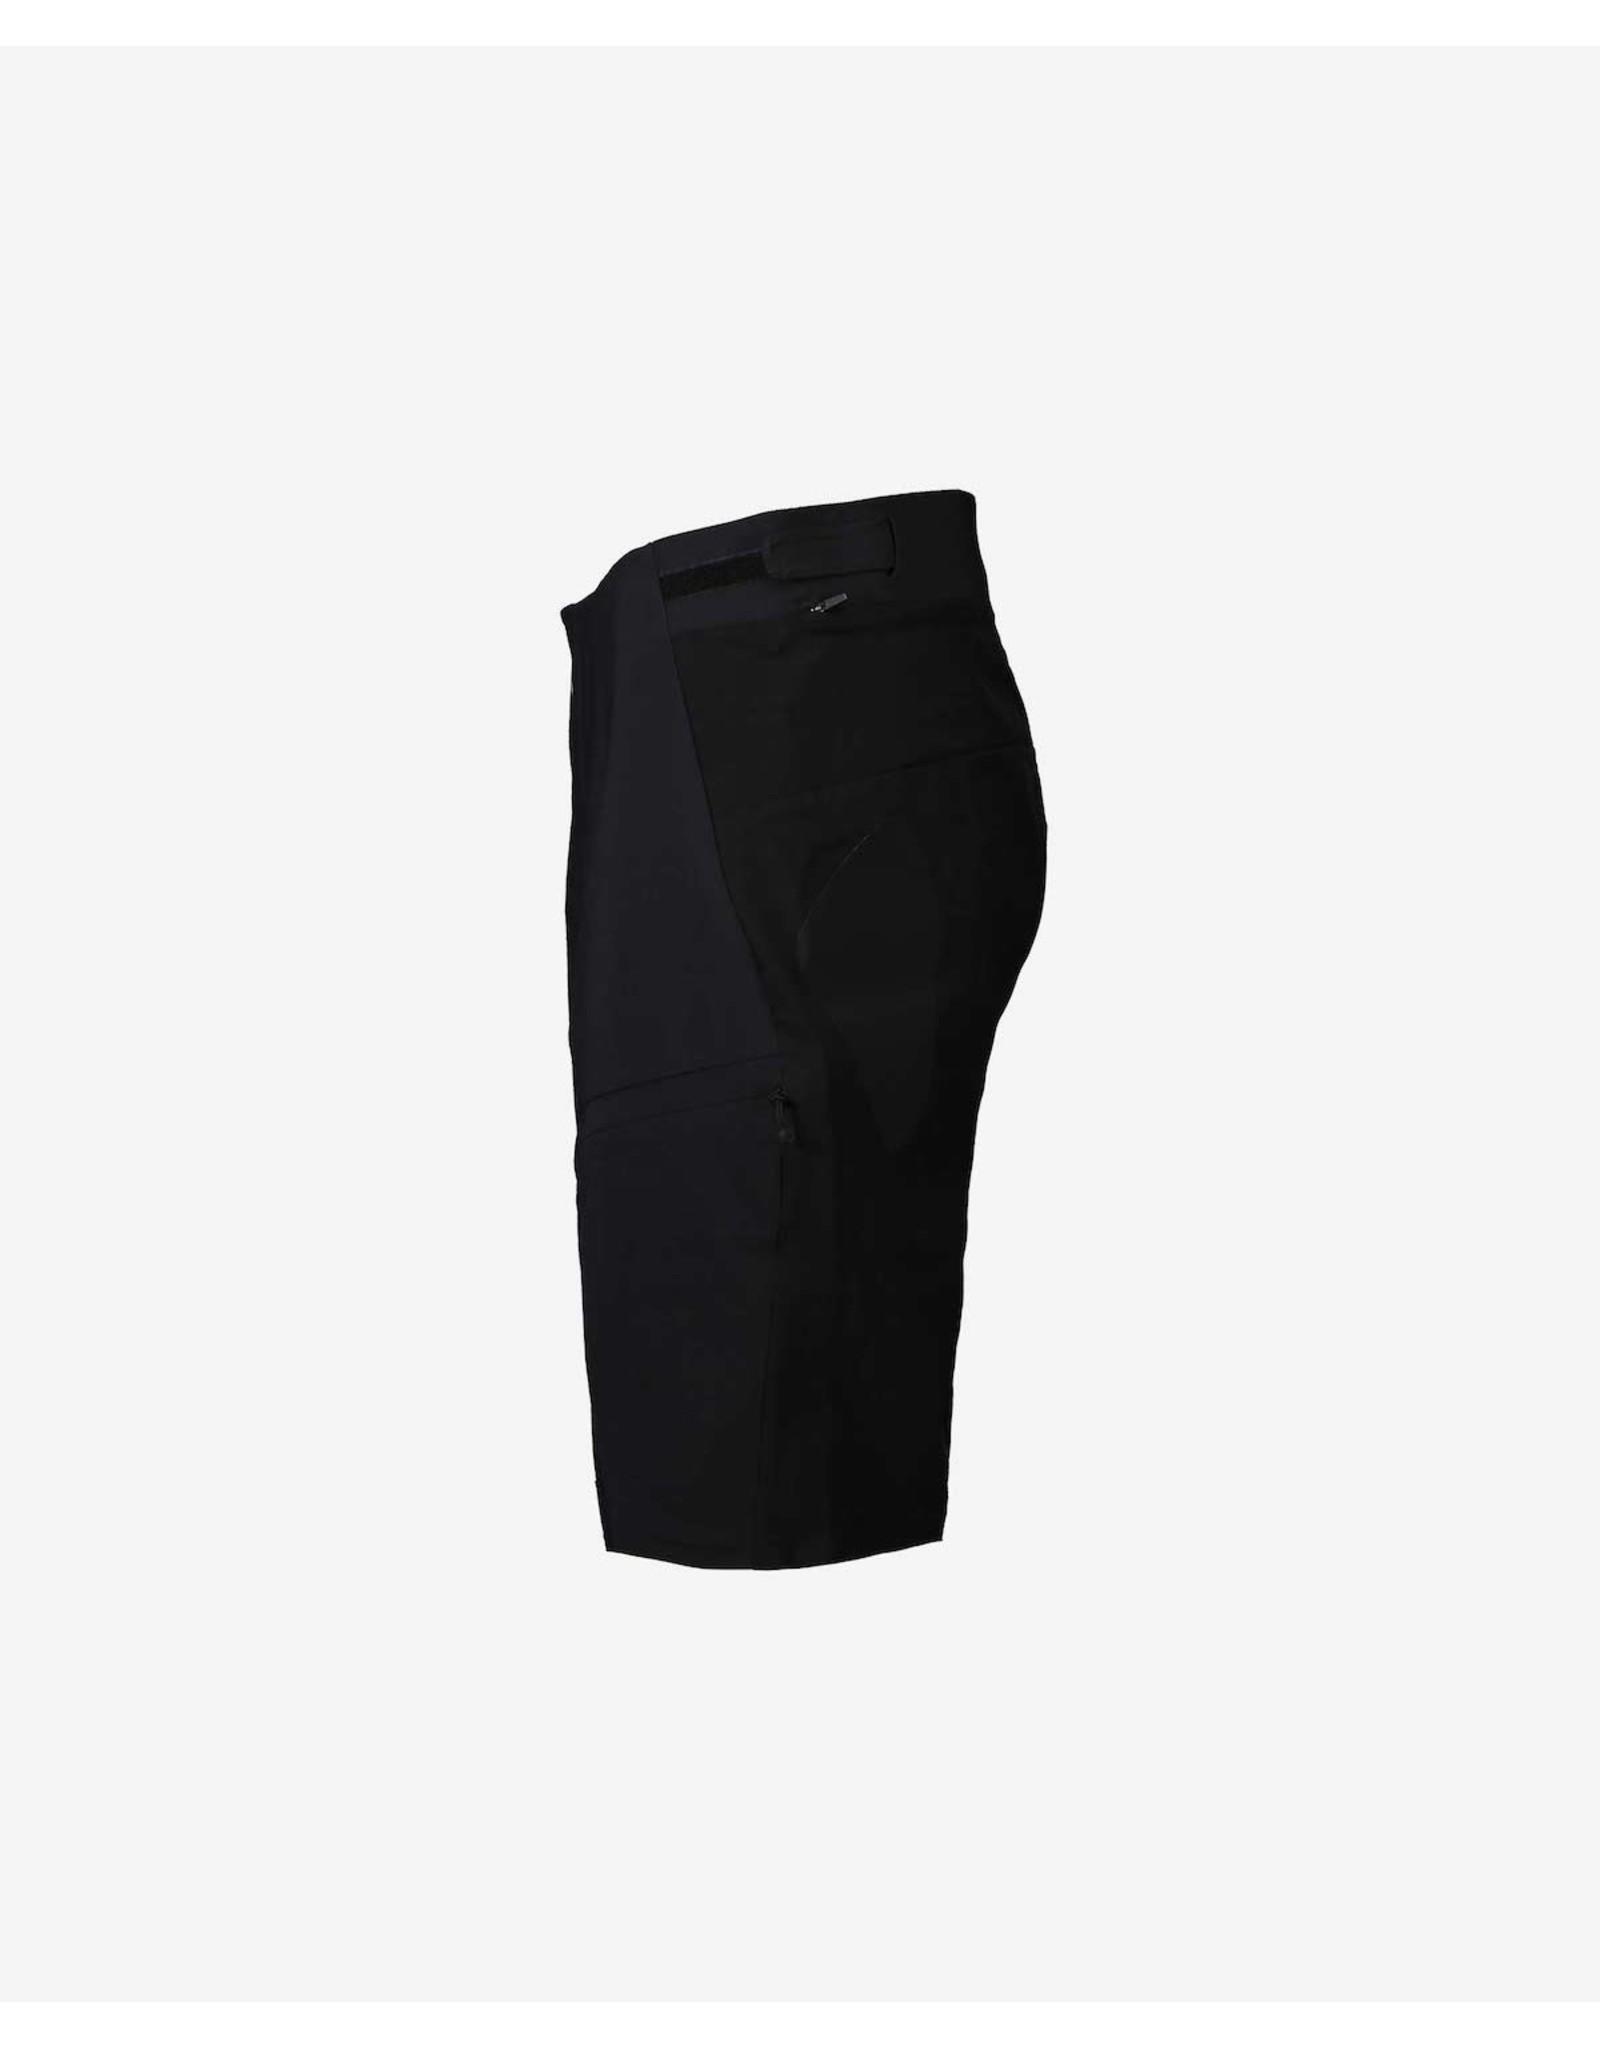 resistance ultra shorts